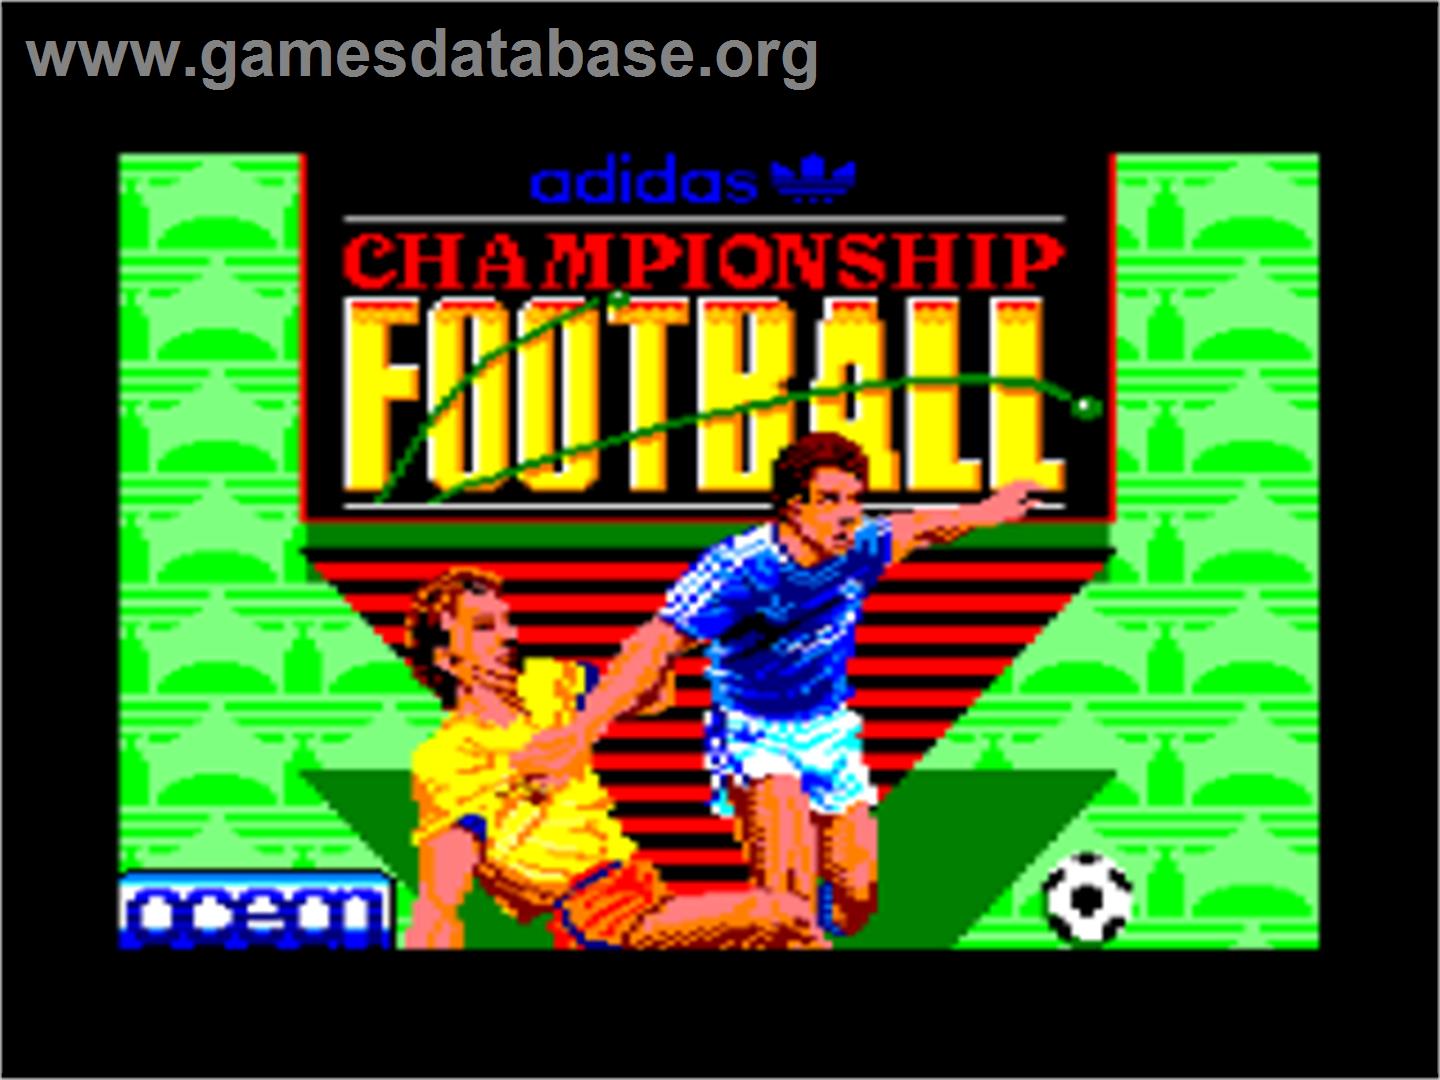 GFL Championship Football - Amstrad CPC - Artwork - Title Screen